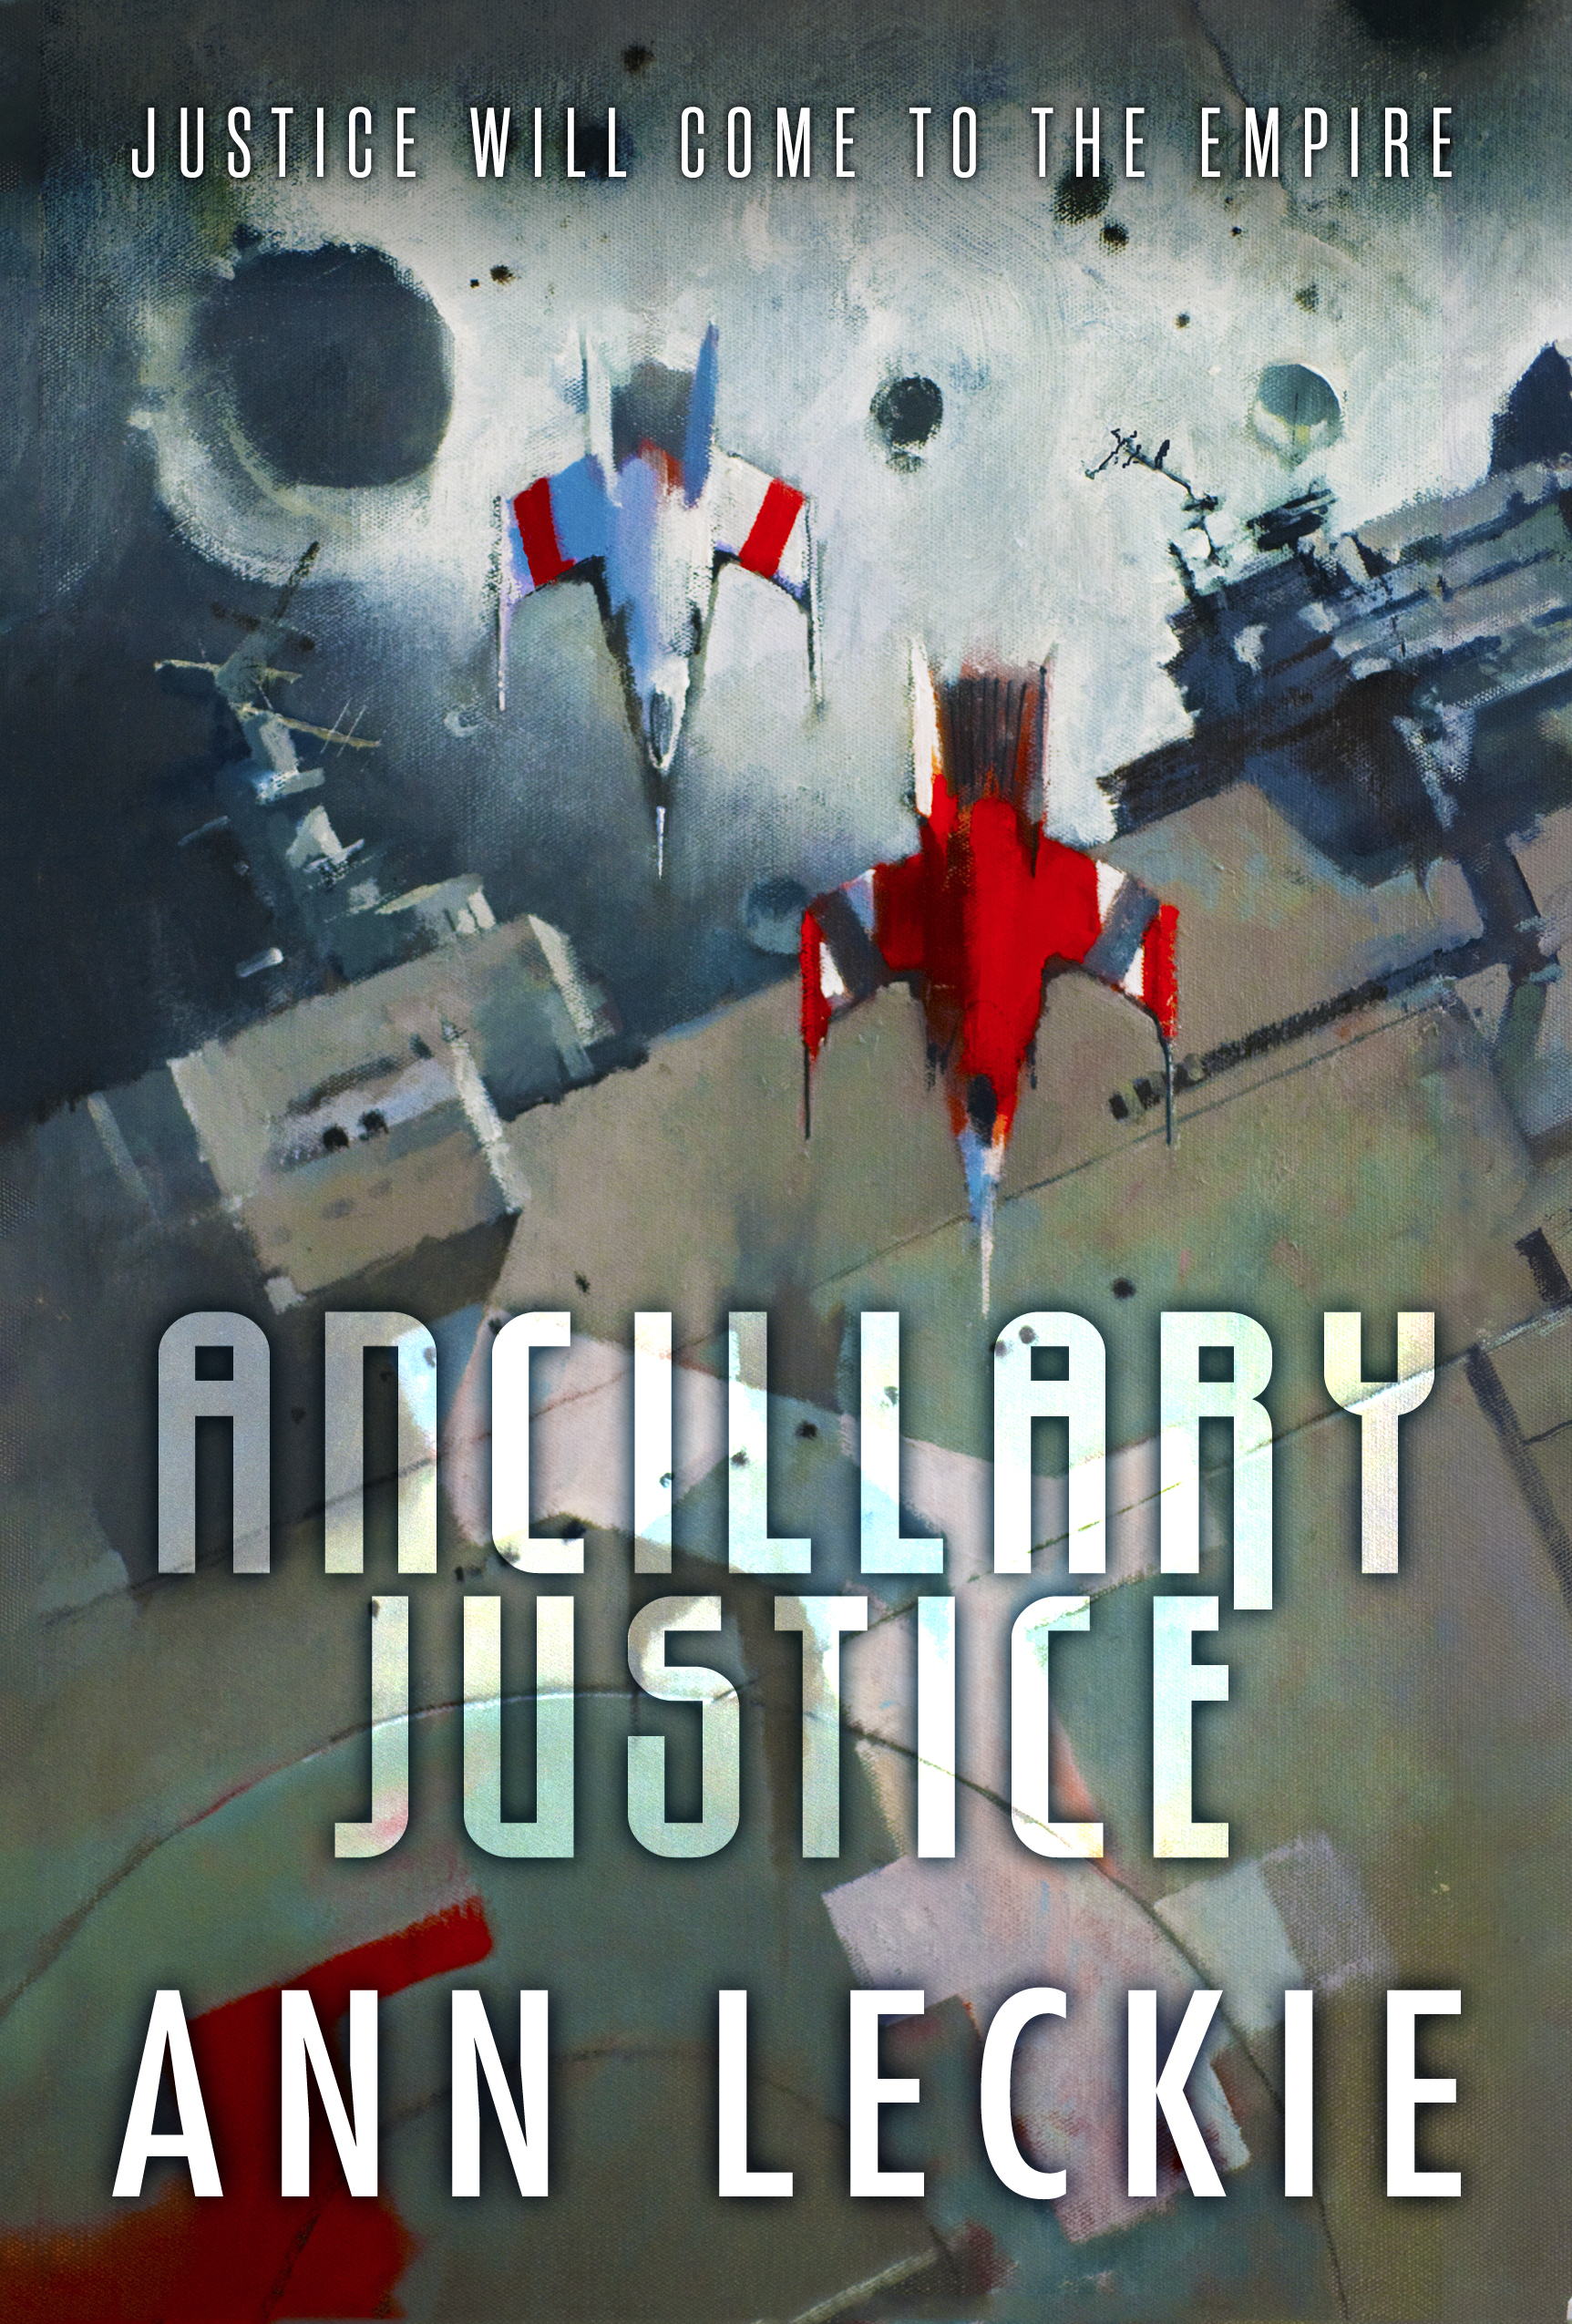 Ann Leckie: Ancillary Justice (2013, Orbit Books)